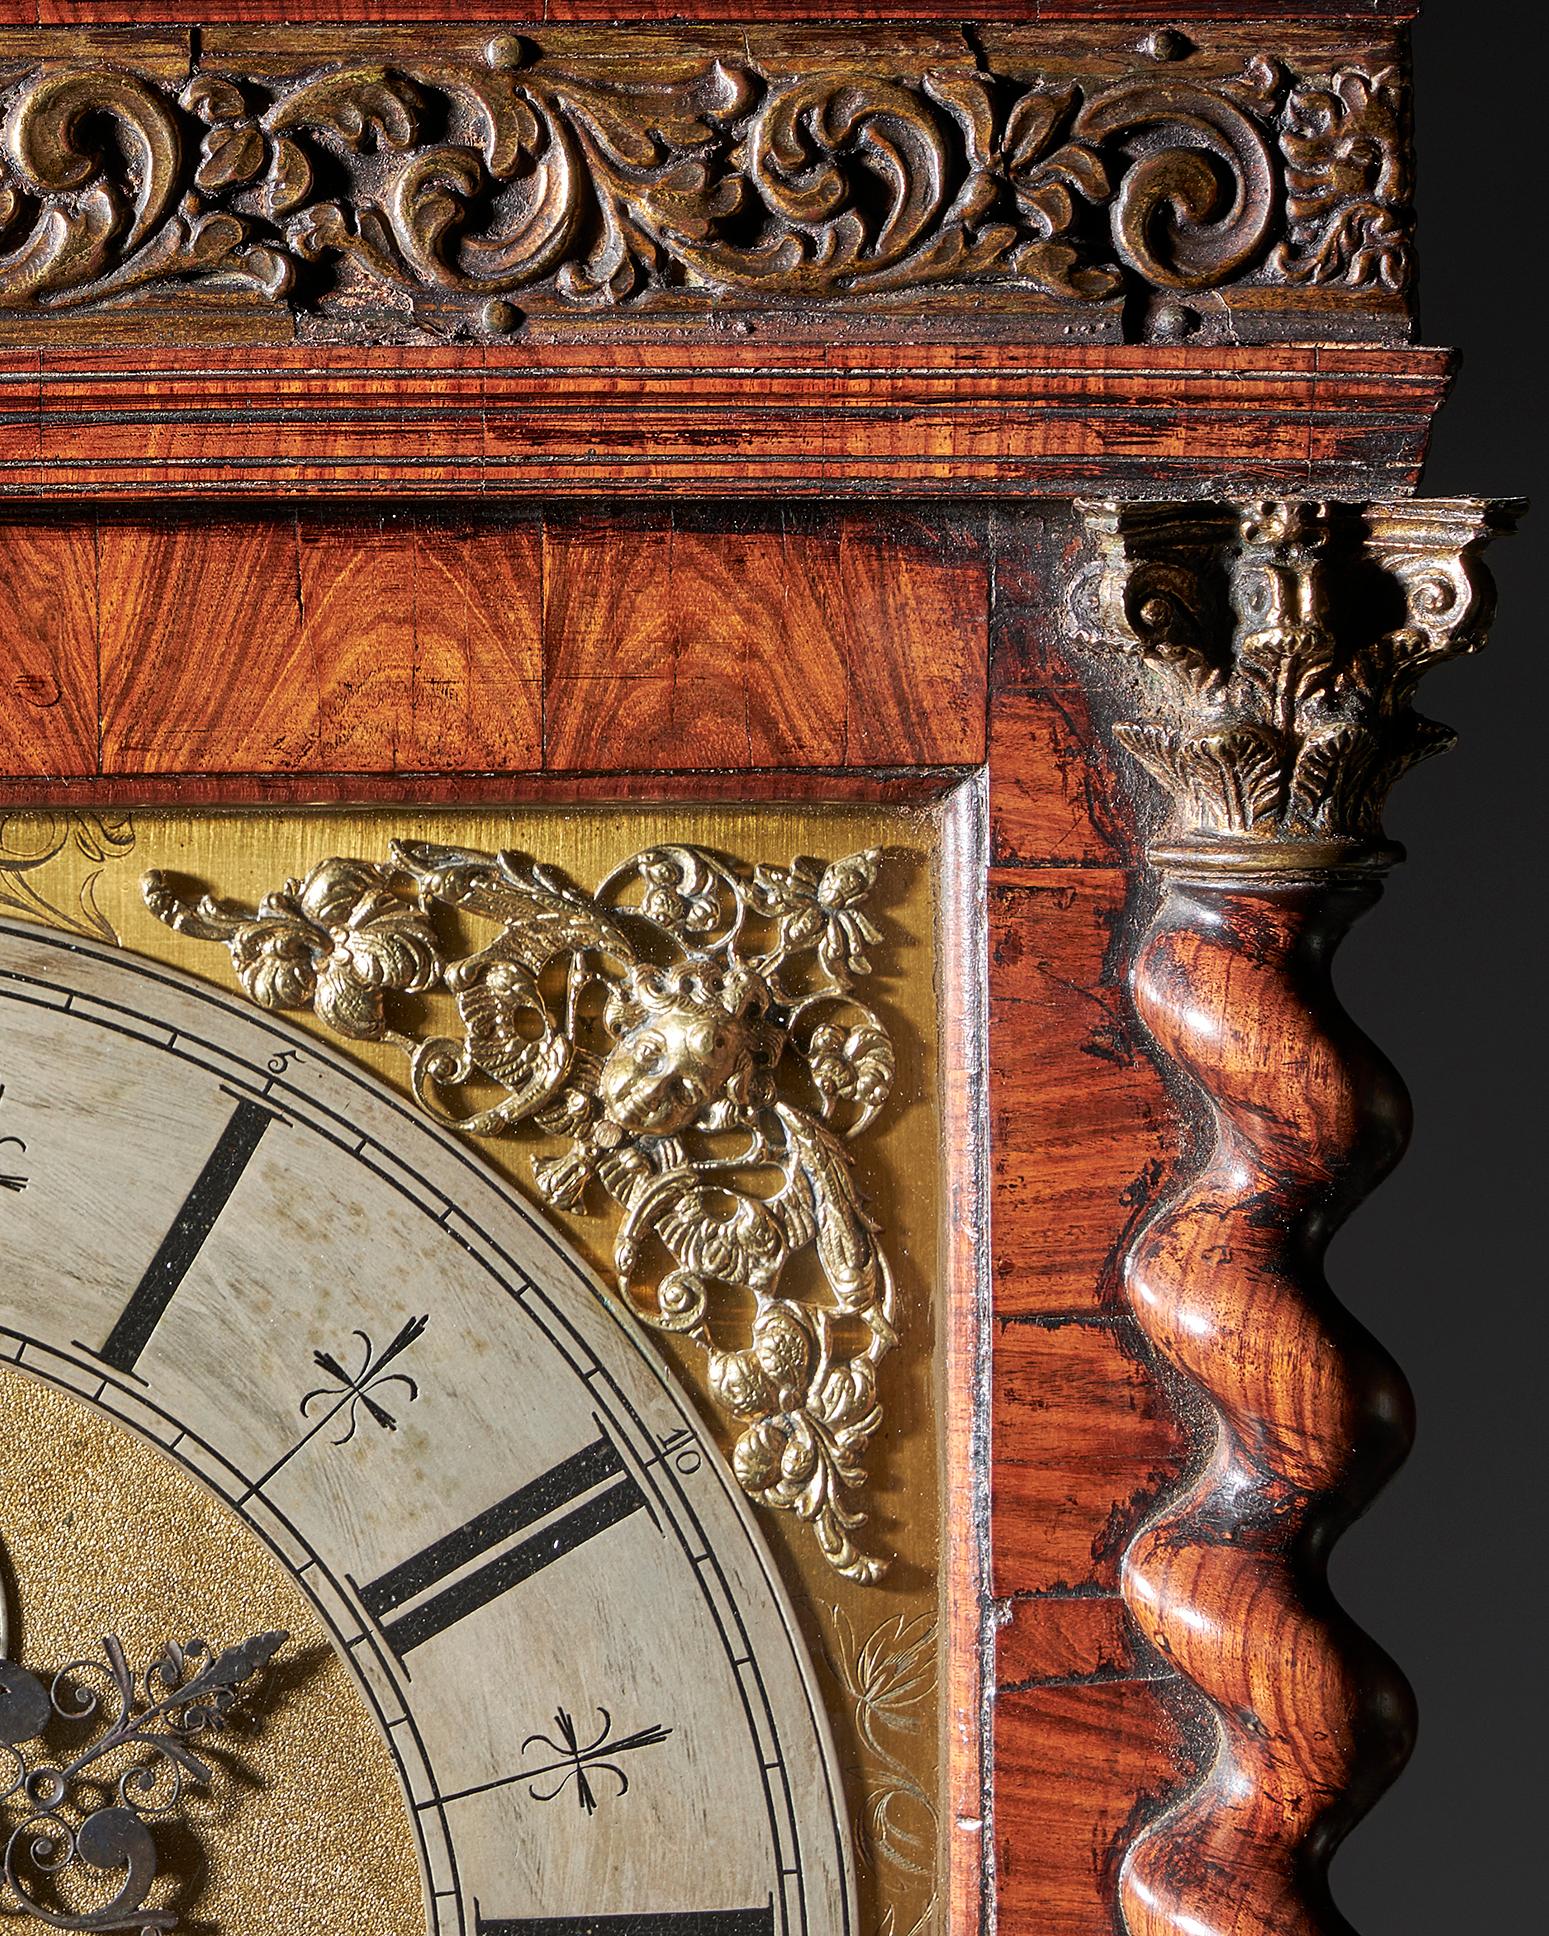 17th century clock